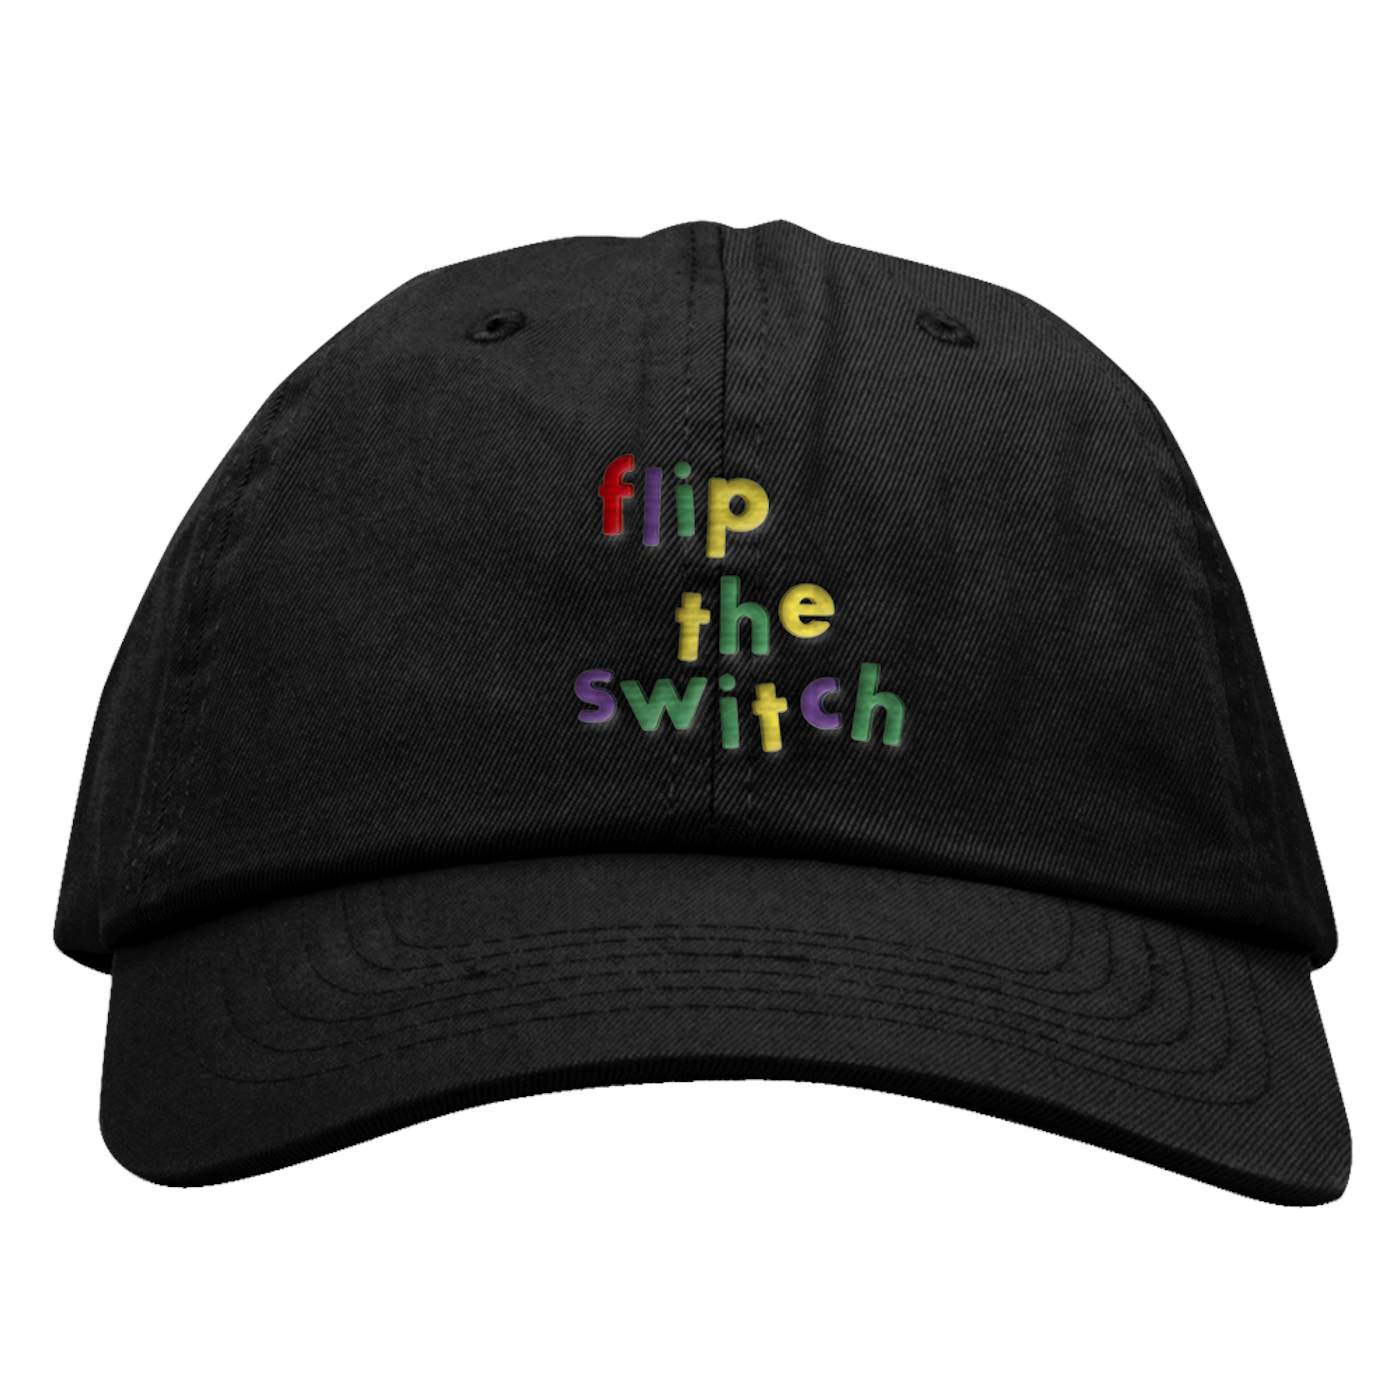 Valentino Khan -  'Flip The Switch' Hat + Digital Download